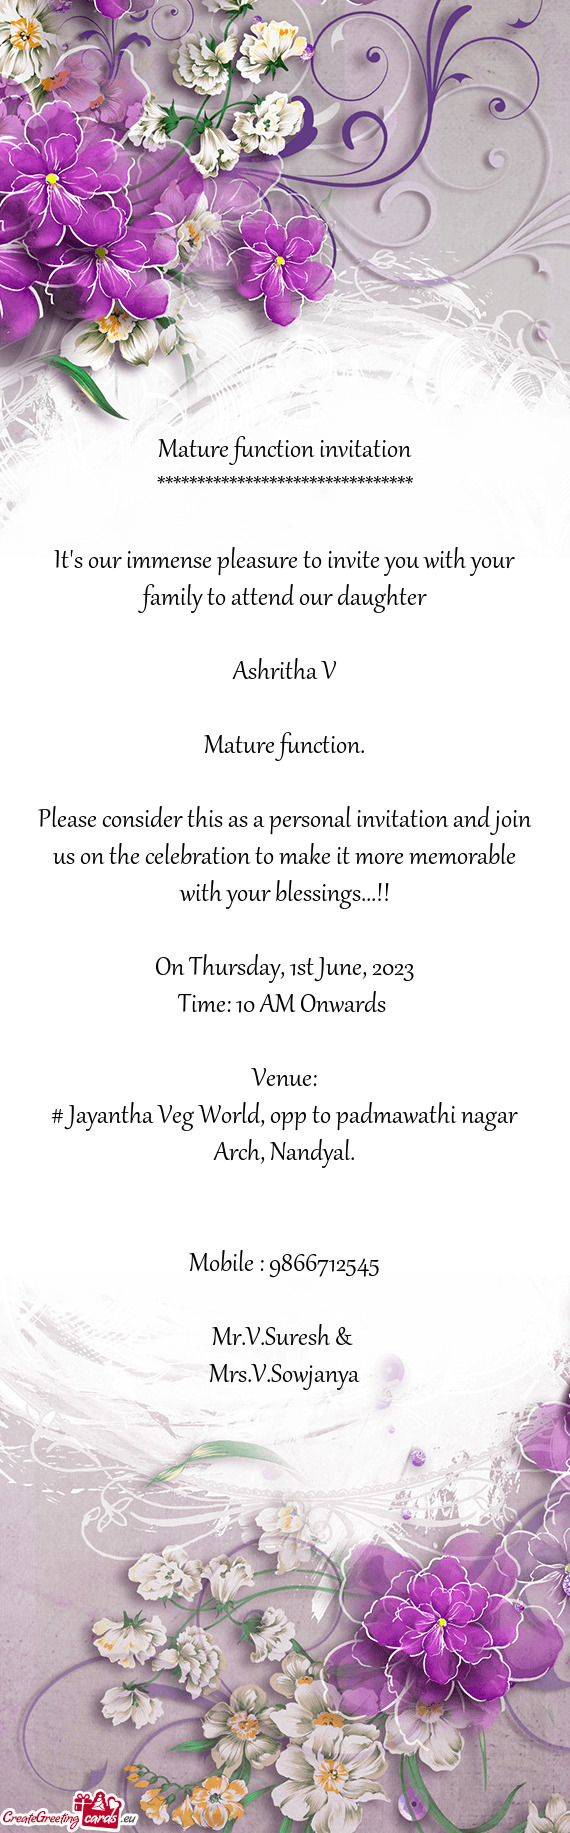 # Jayantha Veg World, opp to padmawathi nagar Arch, Nandyal